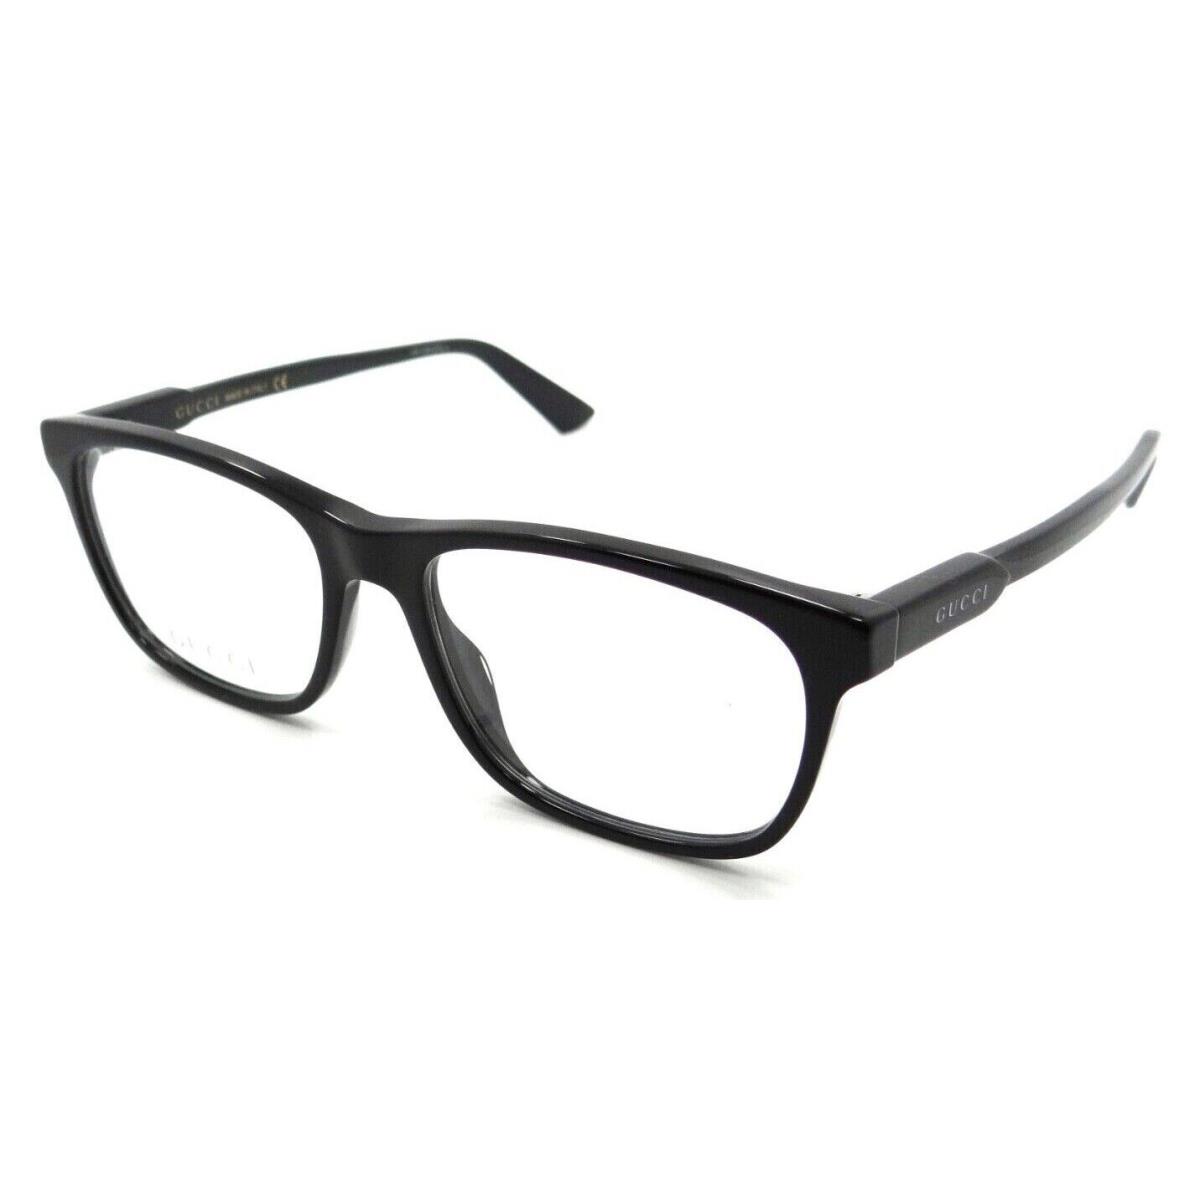 Gucci Eyeglasses Frames GG0490O 001 53-17-150 Black Made in Italy